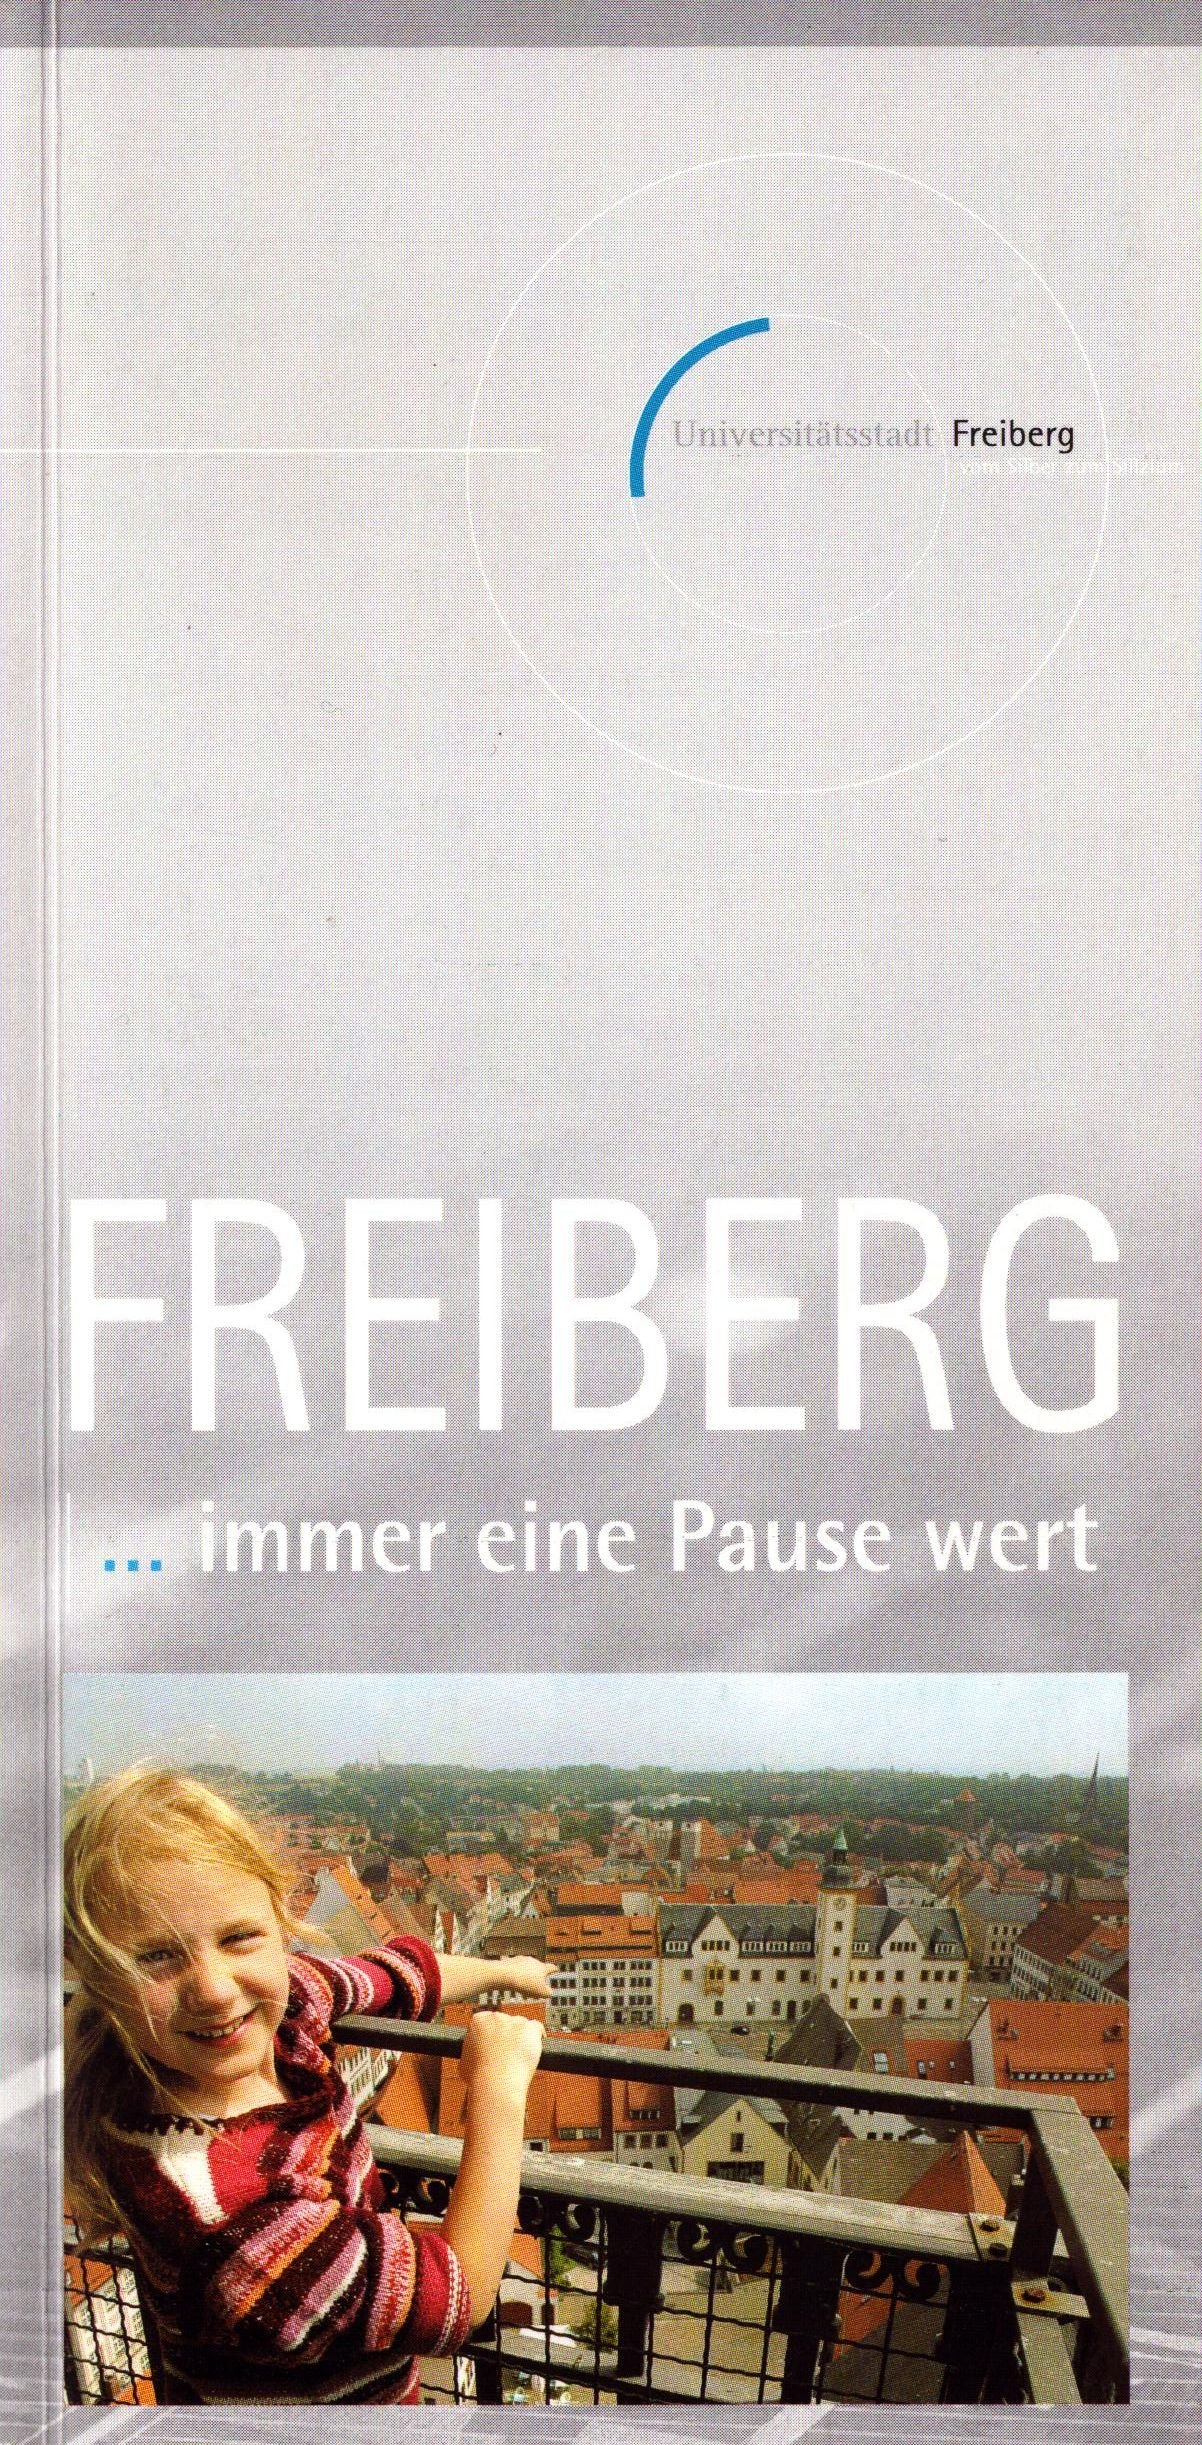 Freiberg ...immer eine Pause wert (Archiv SAXONIA-FREIBERG-STIFTUNG CC BY-NC-SA)